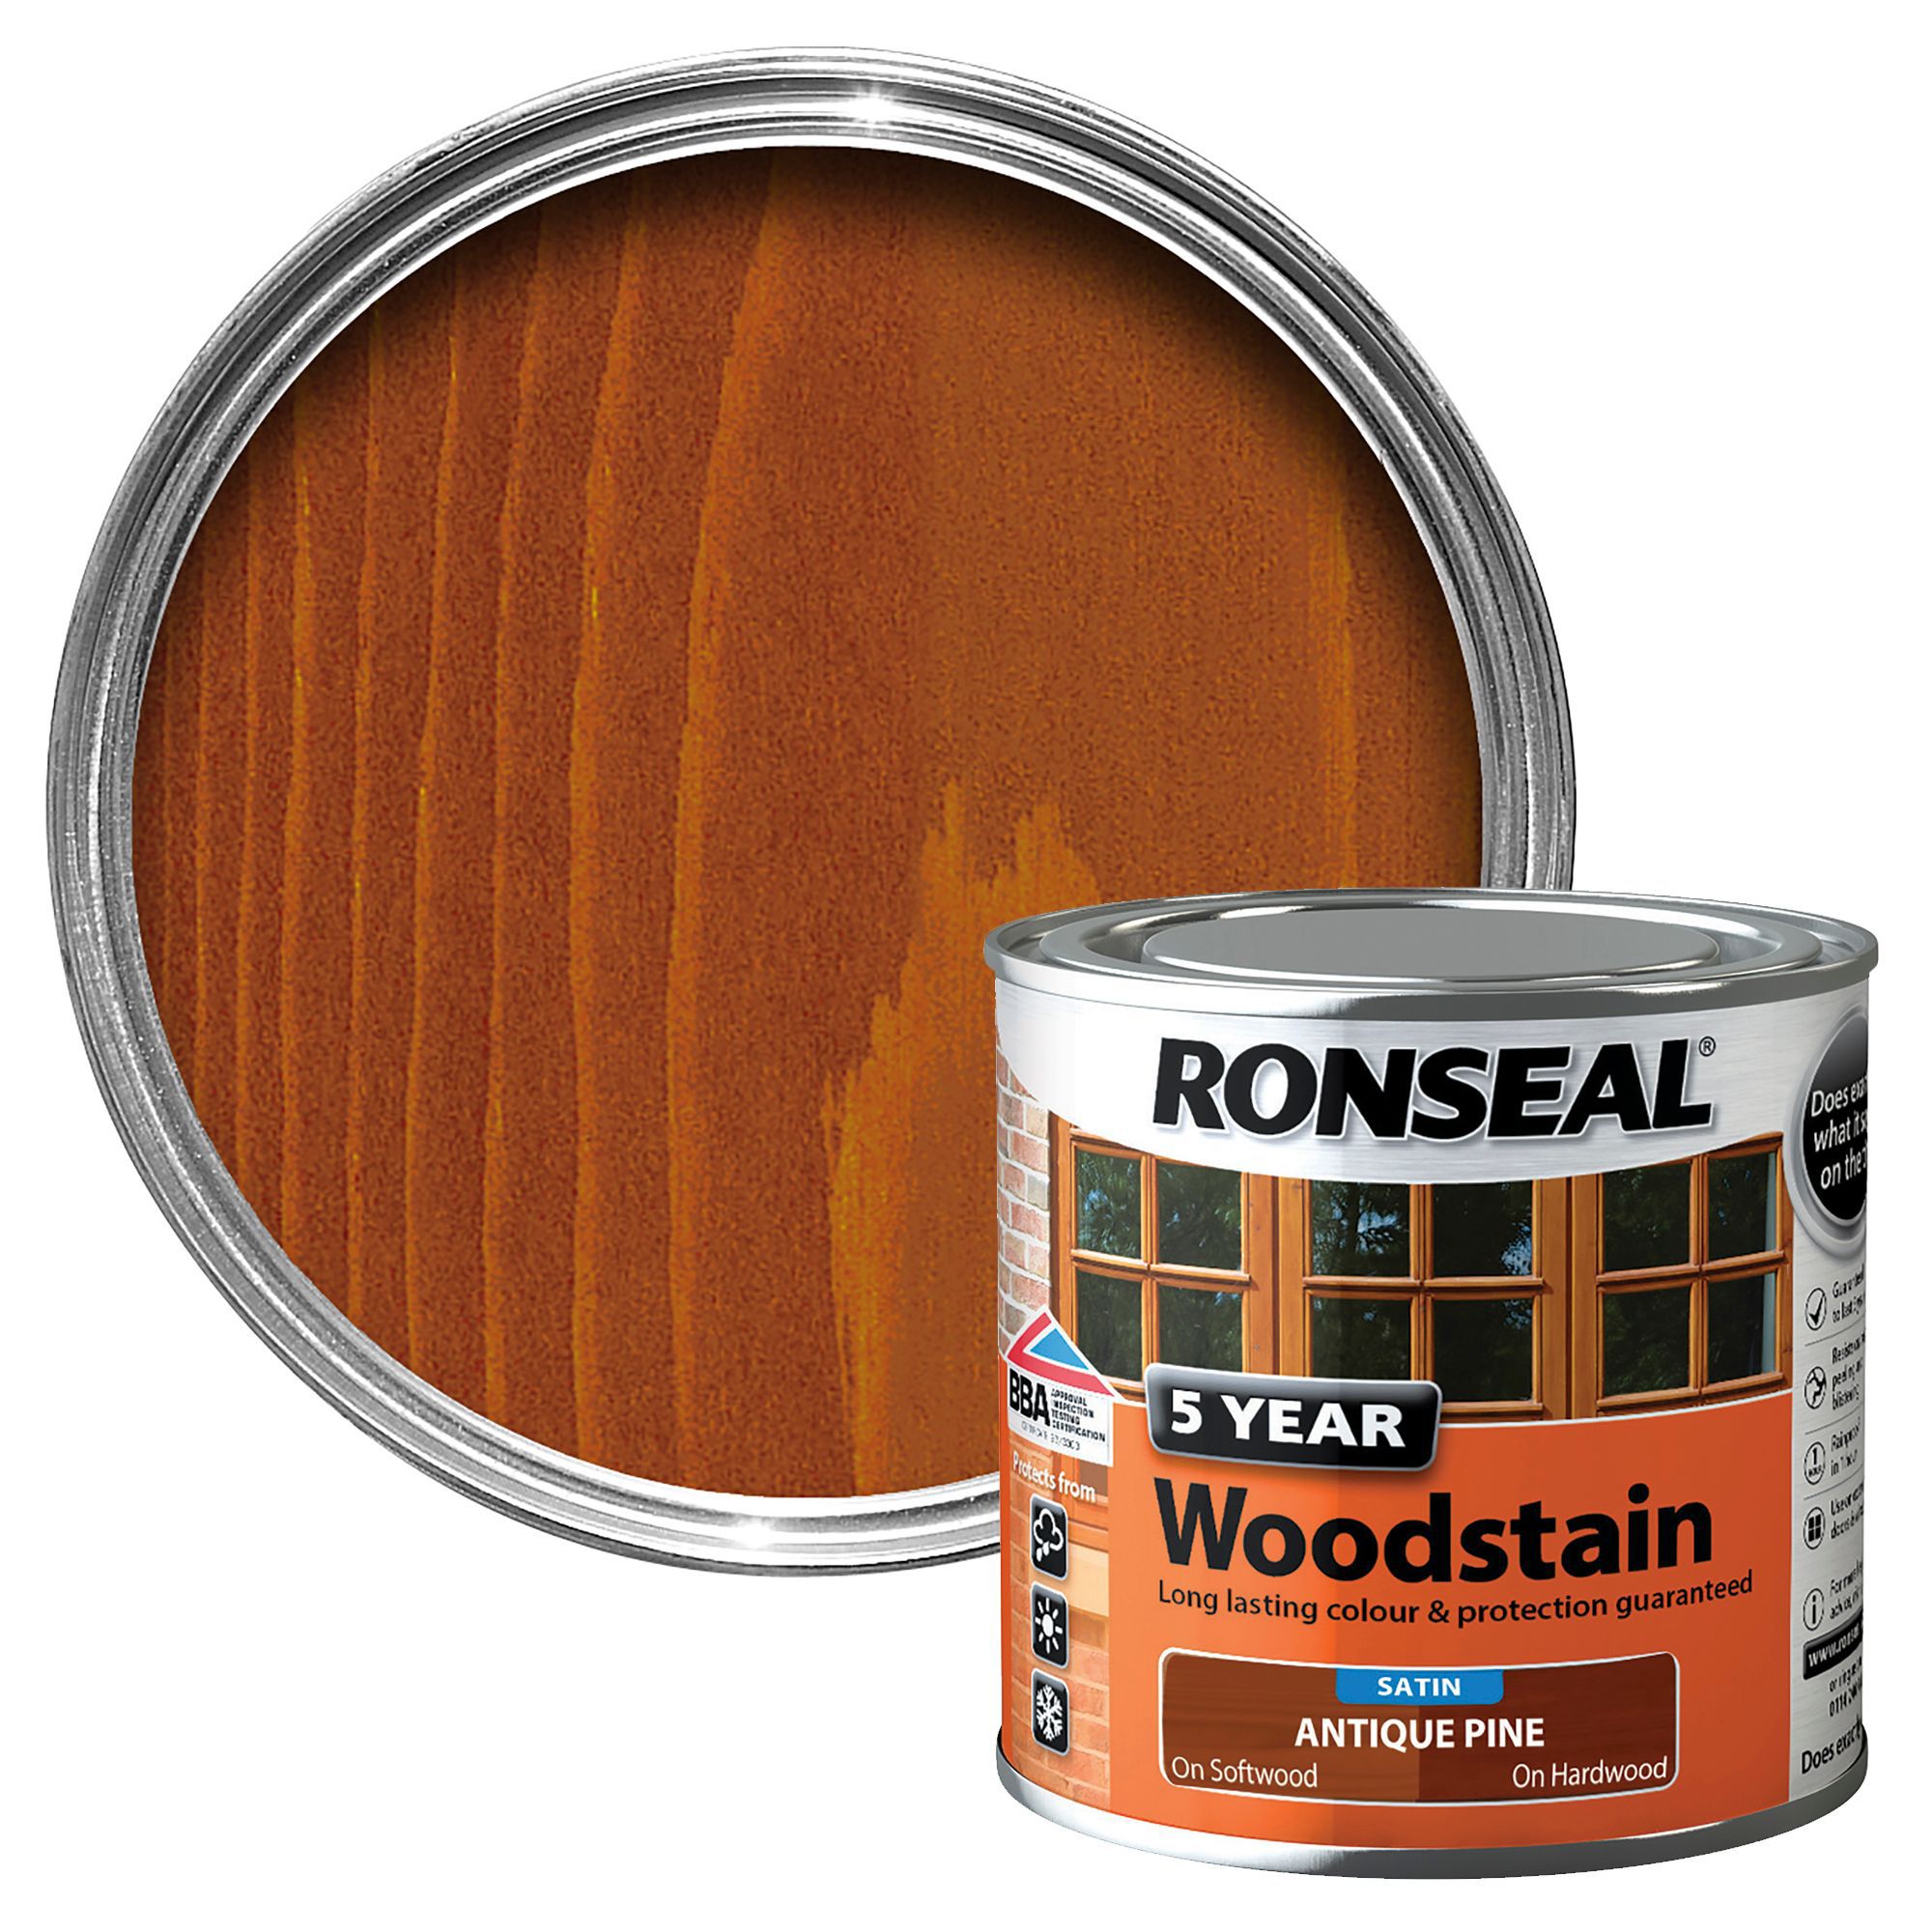 Ronseal Antique pine High satin sheen Wood stain, 250